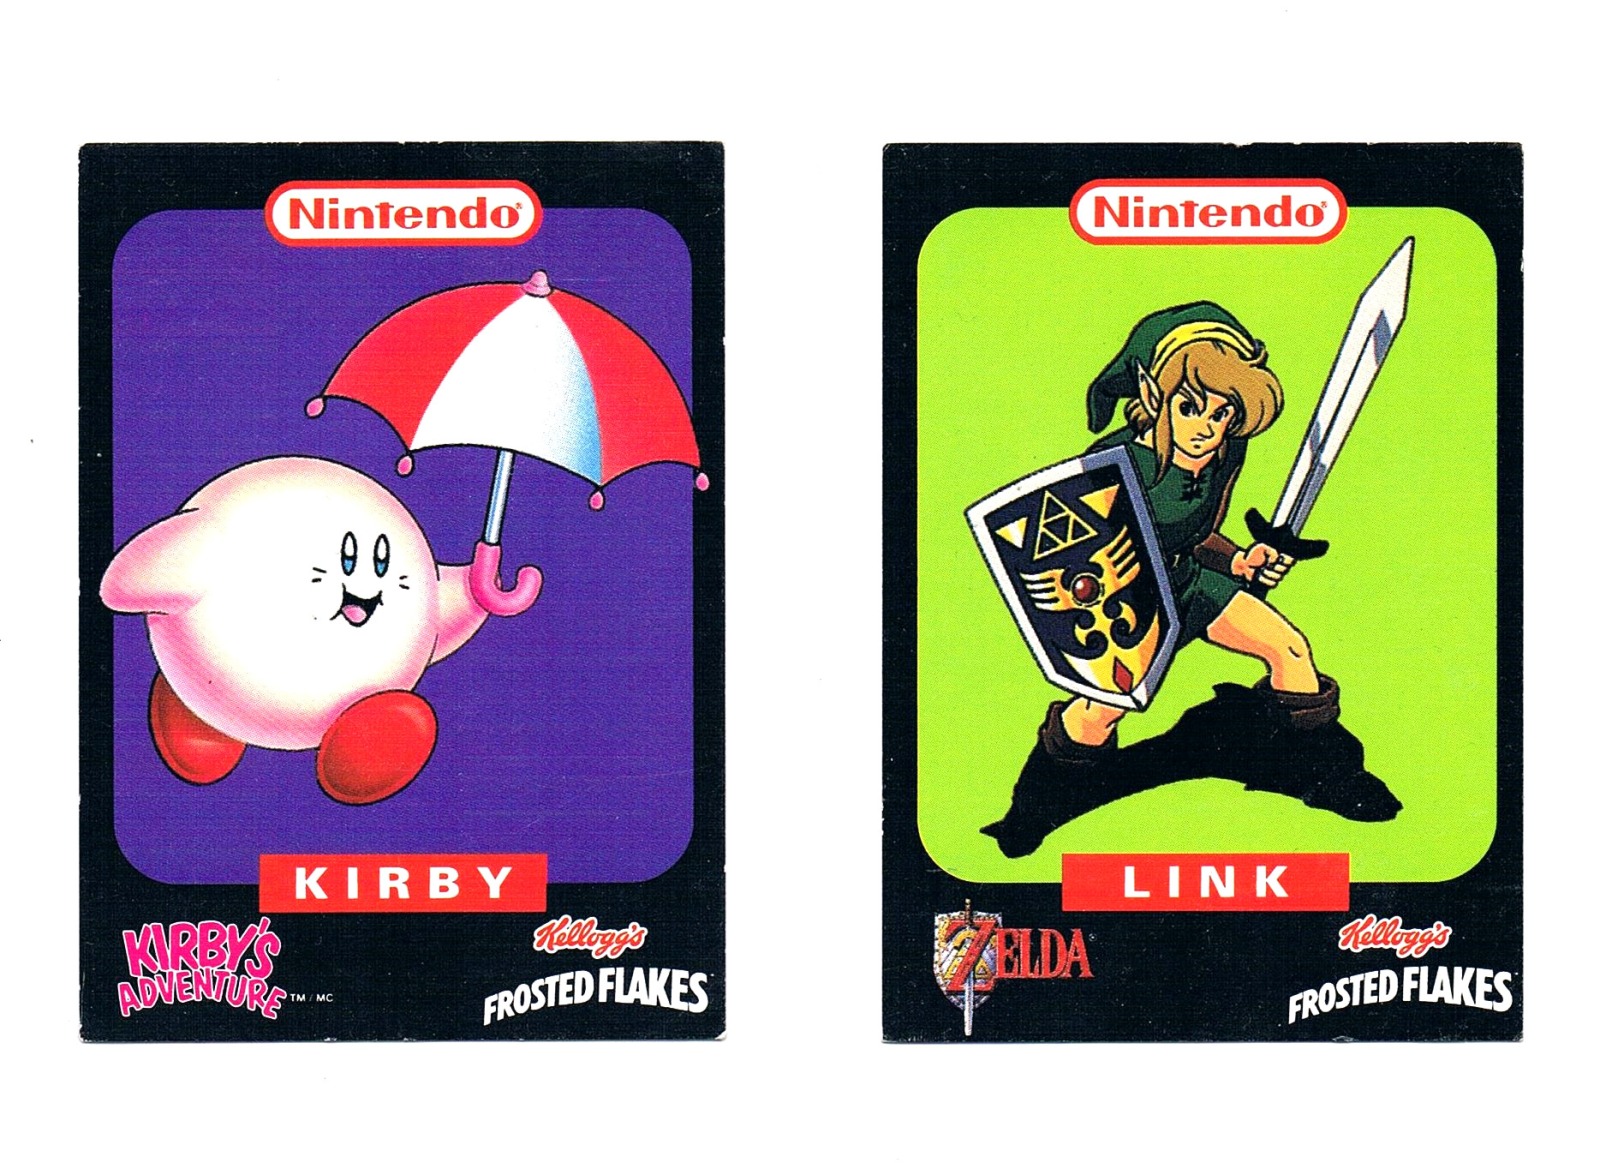 Nintendo - 80s/90s merchandise & advertising - 3